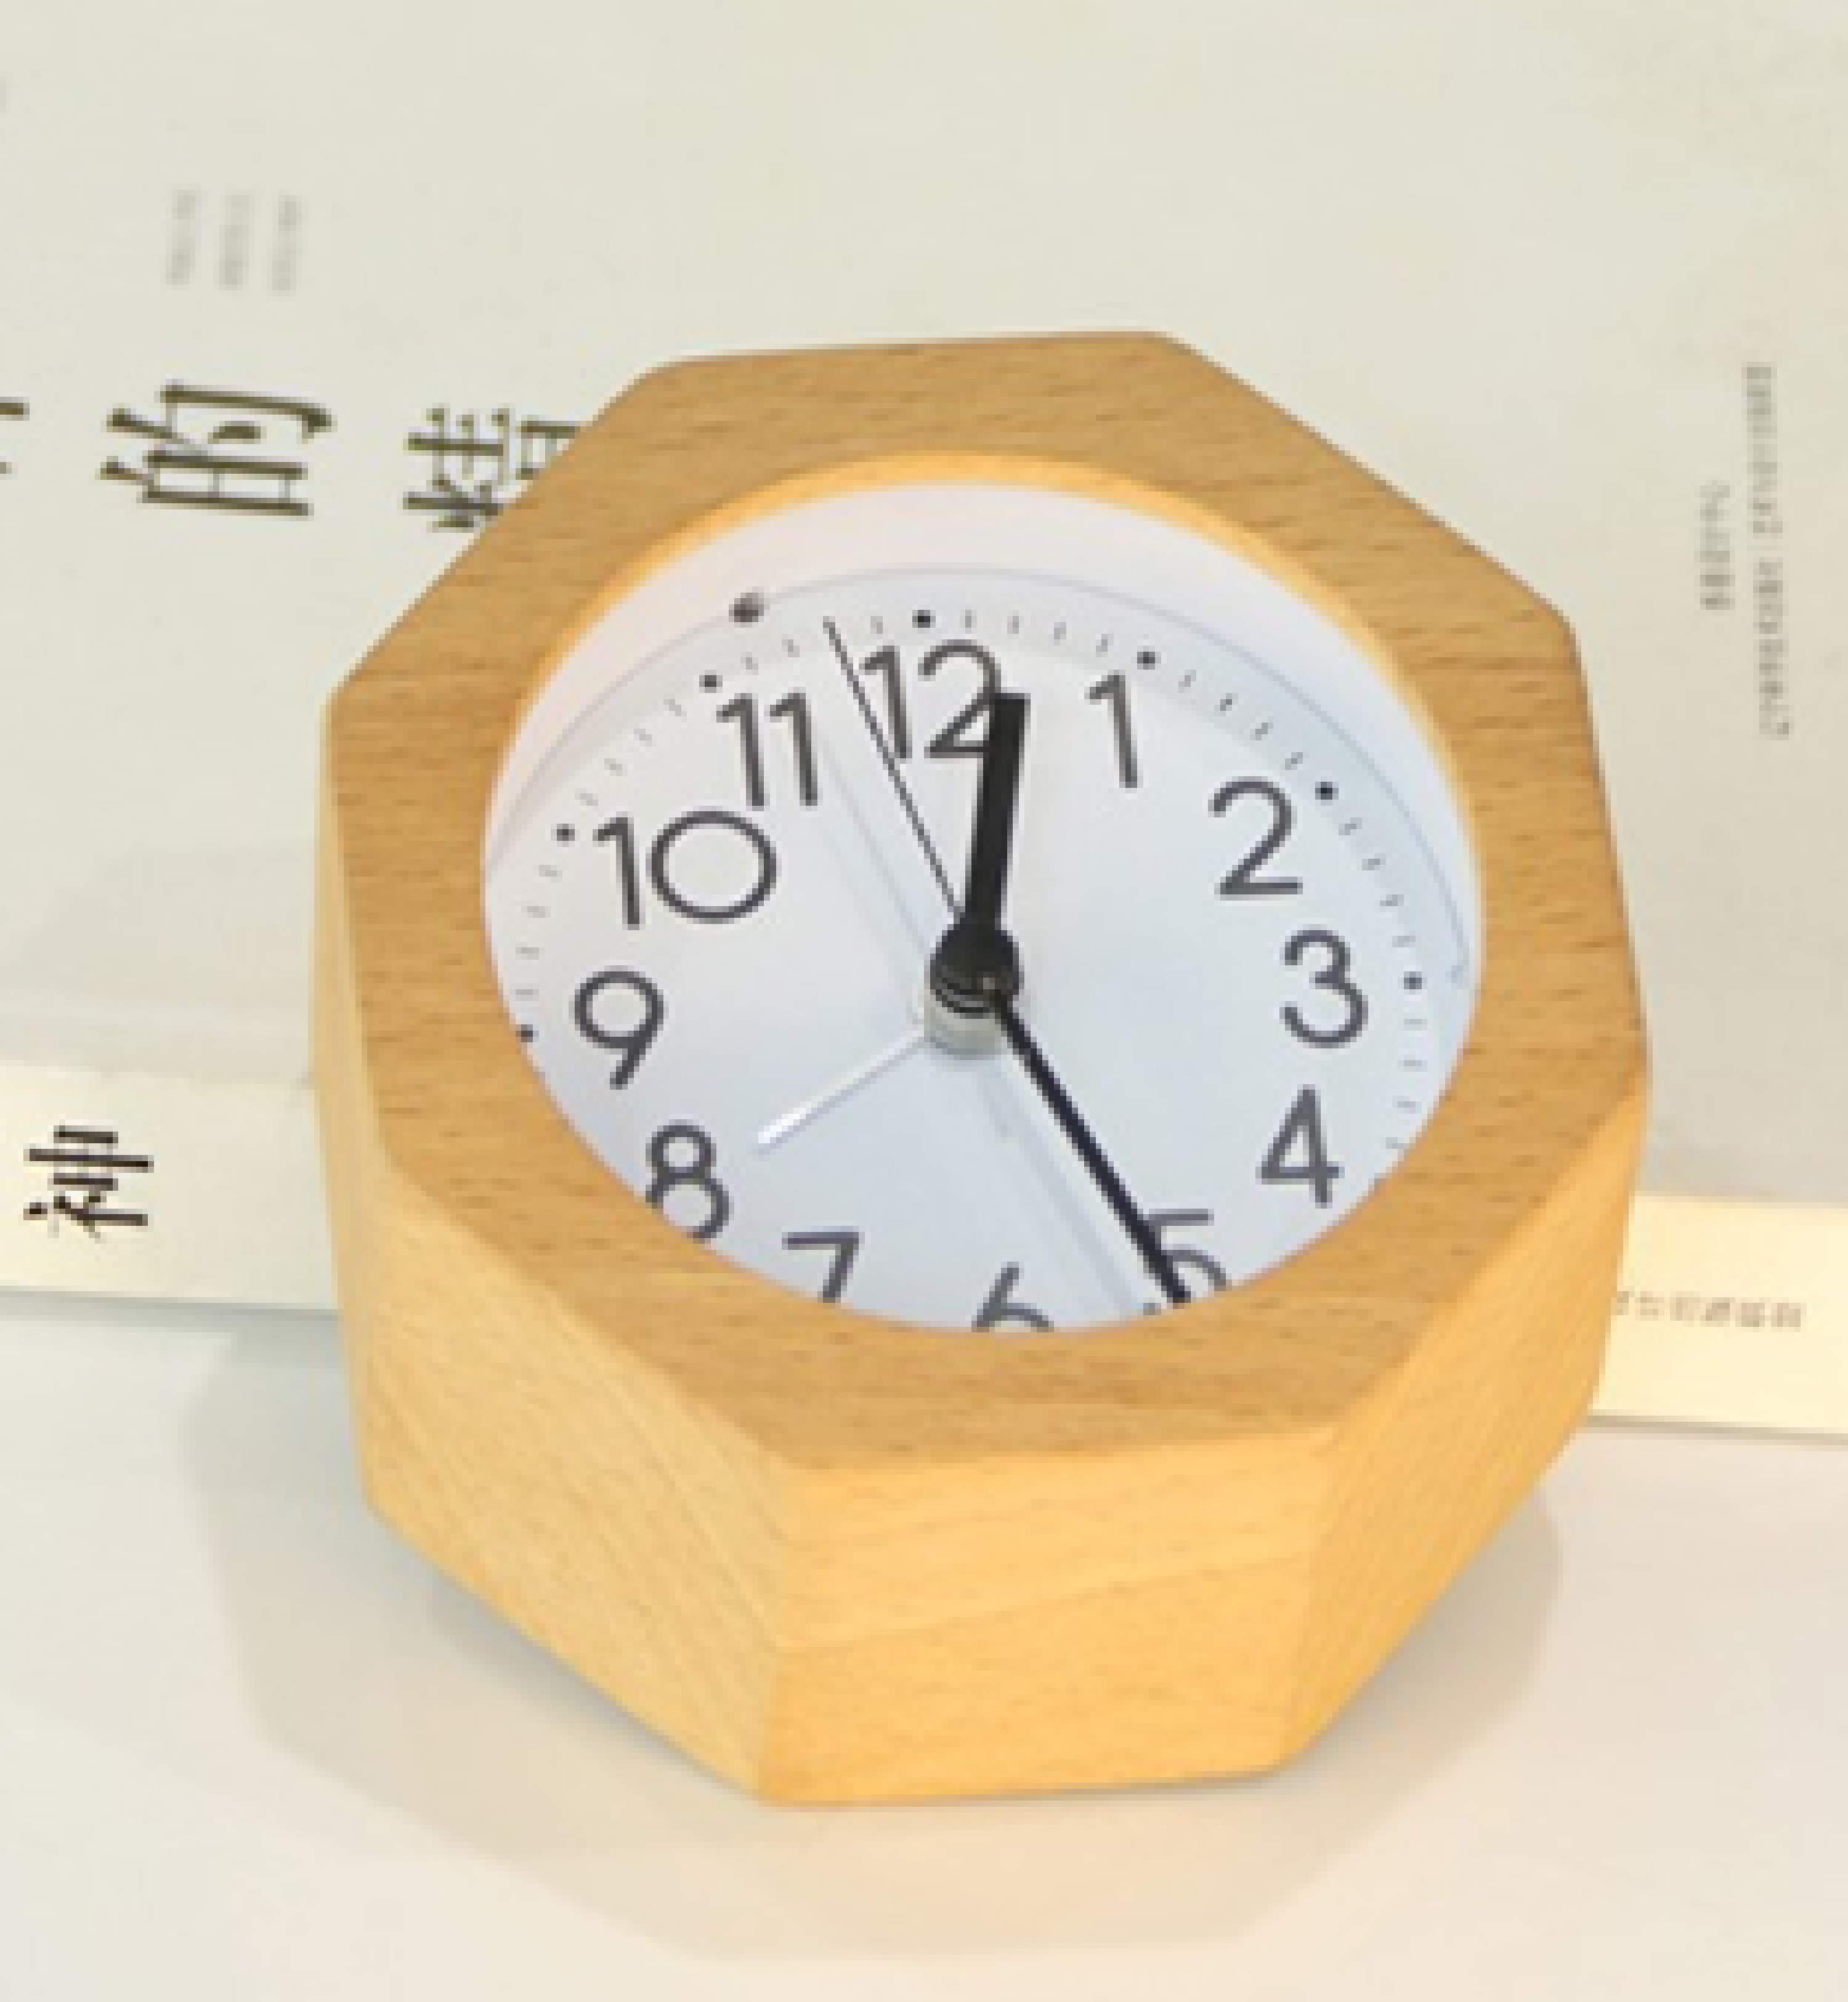  Octagonal solid wood clock, student sleepiness, lazy man alarm clock